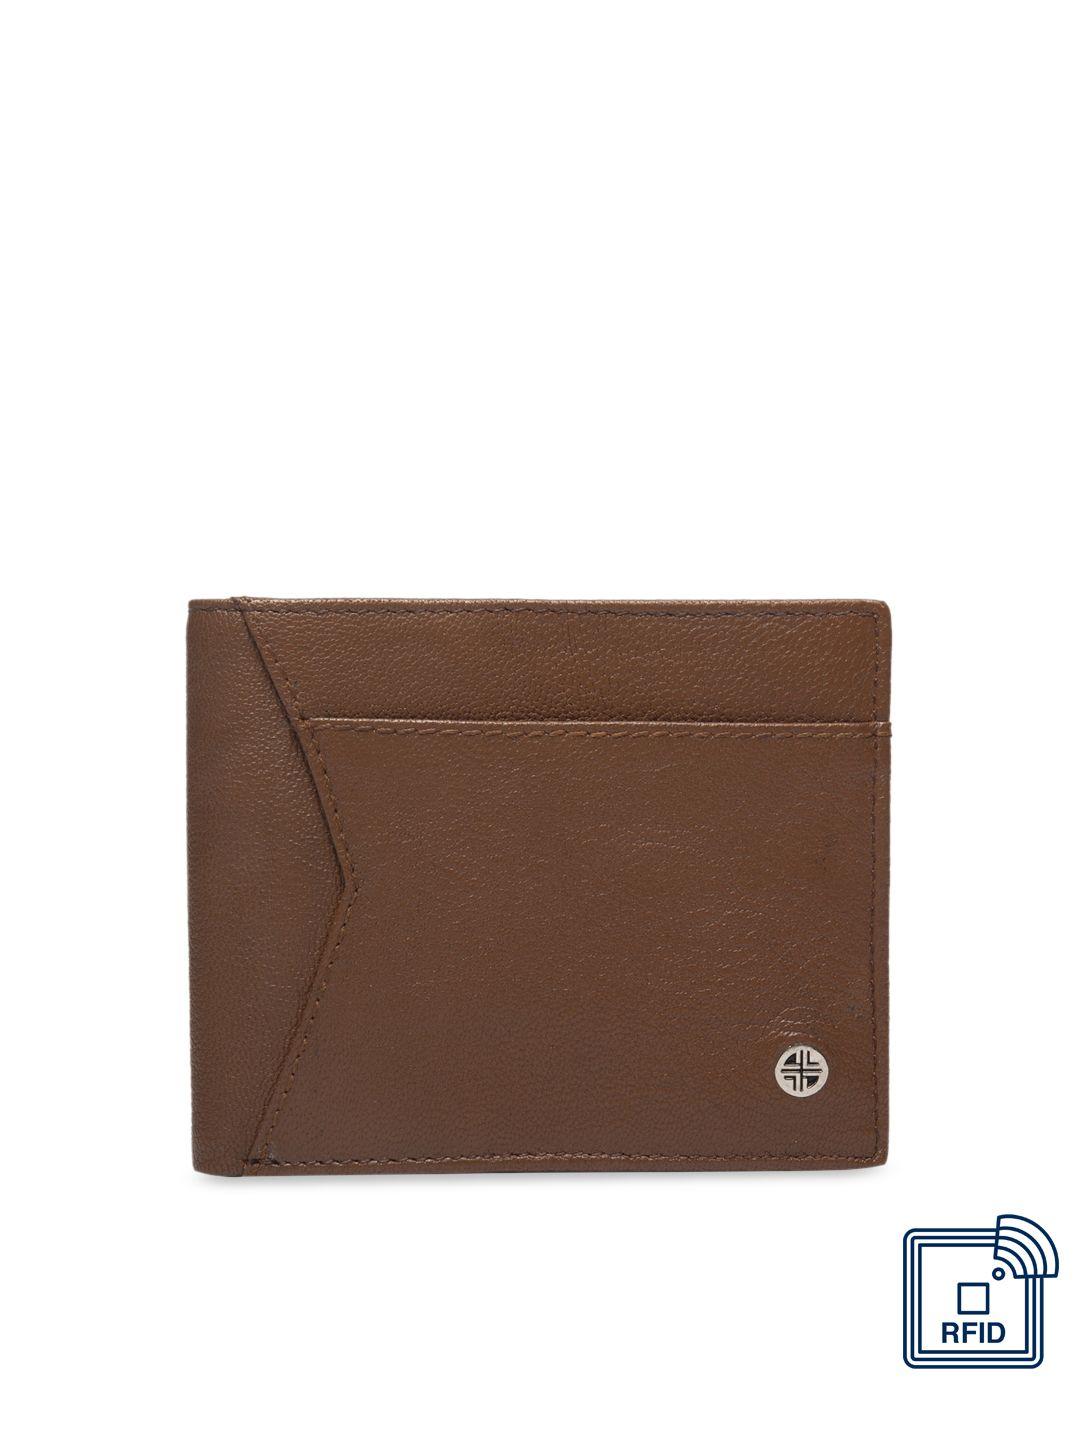 carlton london men tan solid rfid leather two fold wallet